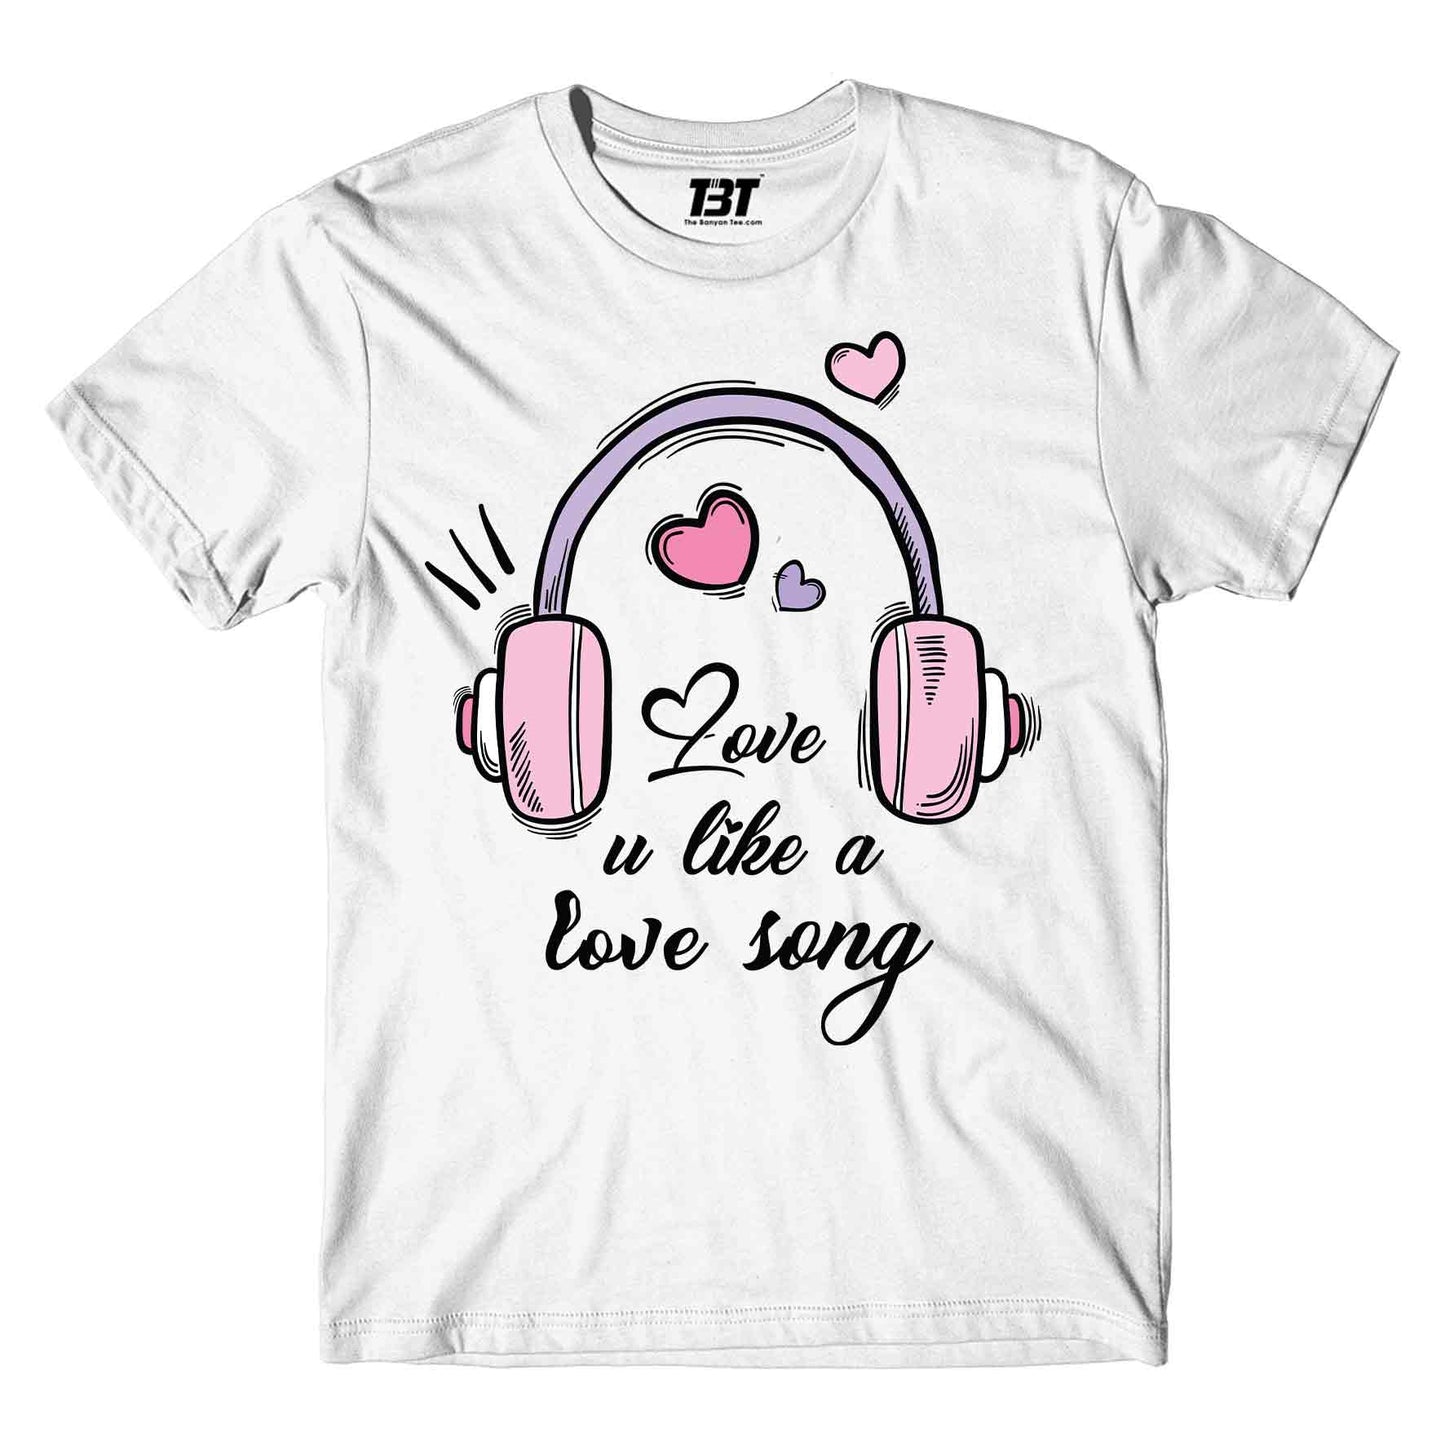 selena gomez love you like a love song t-shirt music band buy online usa united states the banyan tee tbt men women girls boys unisex white